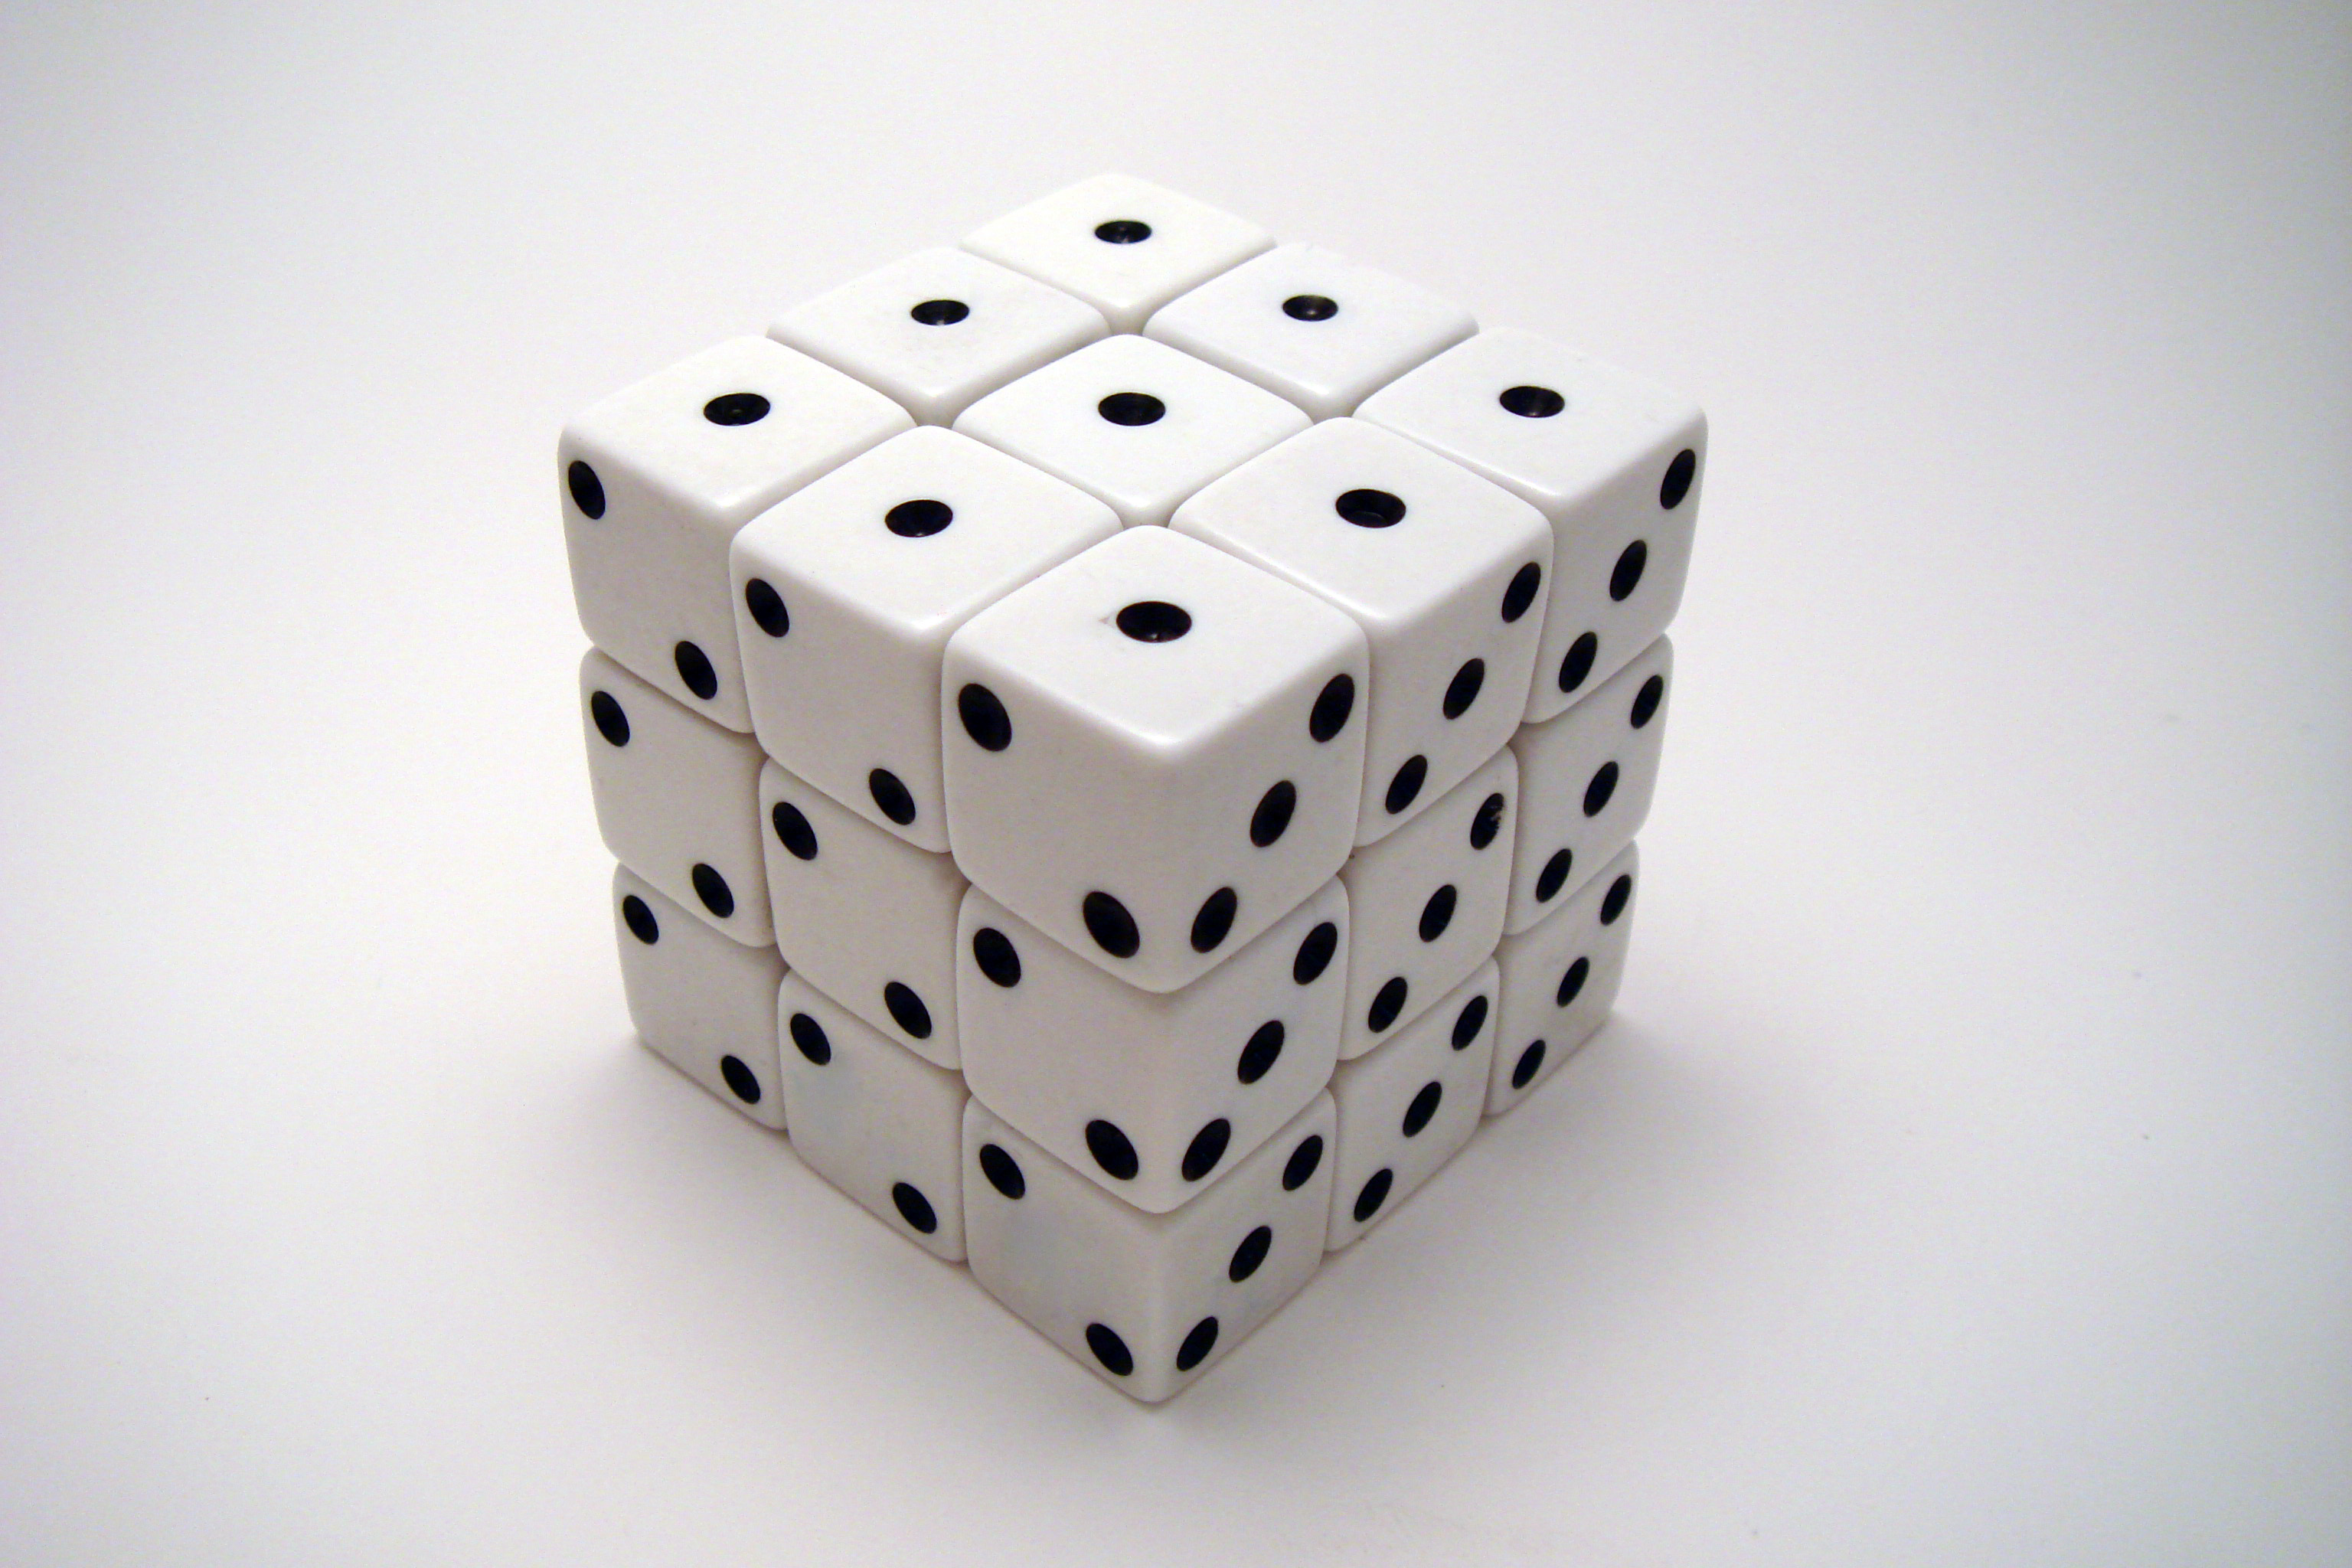 dice, cubes - desktop wallpaper